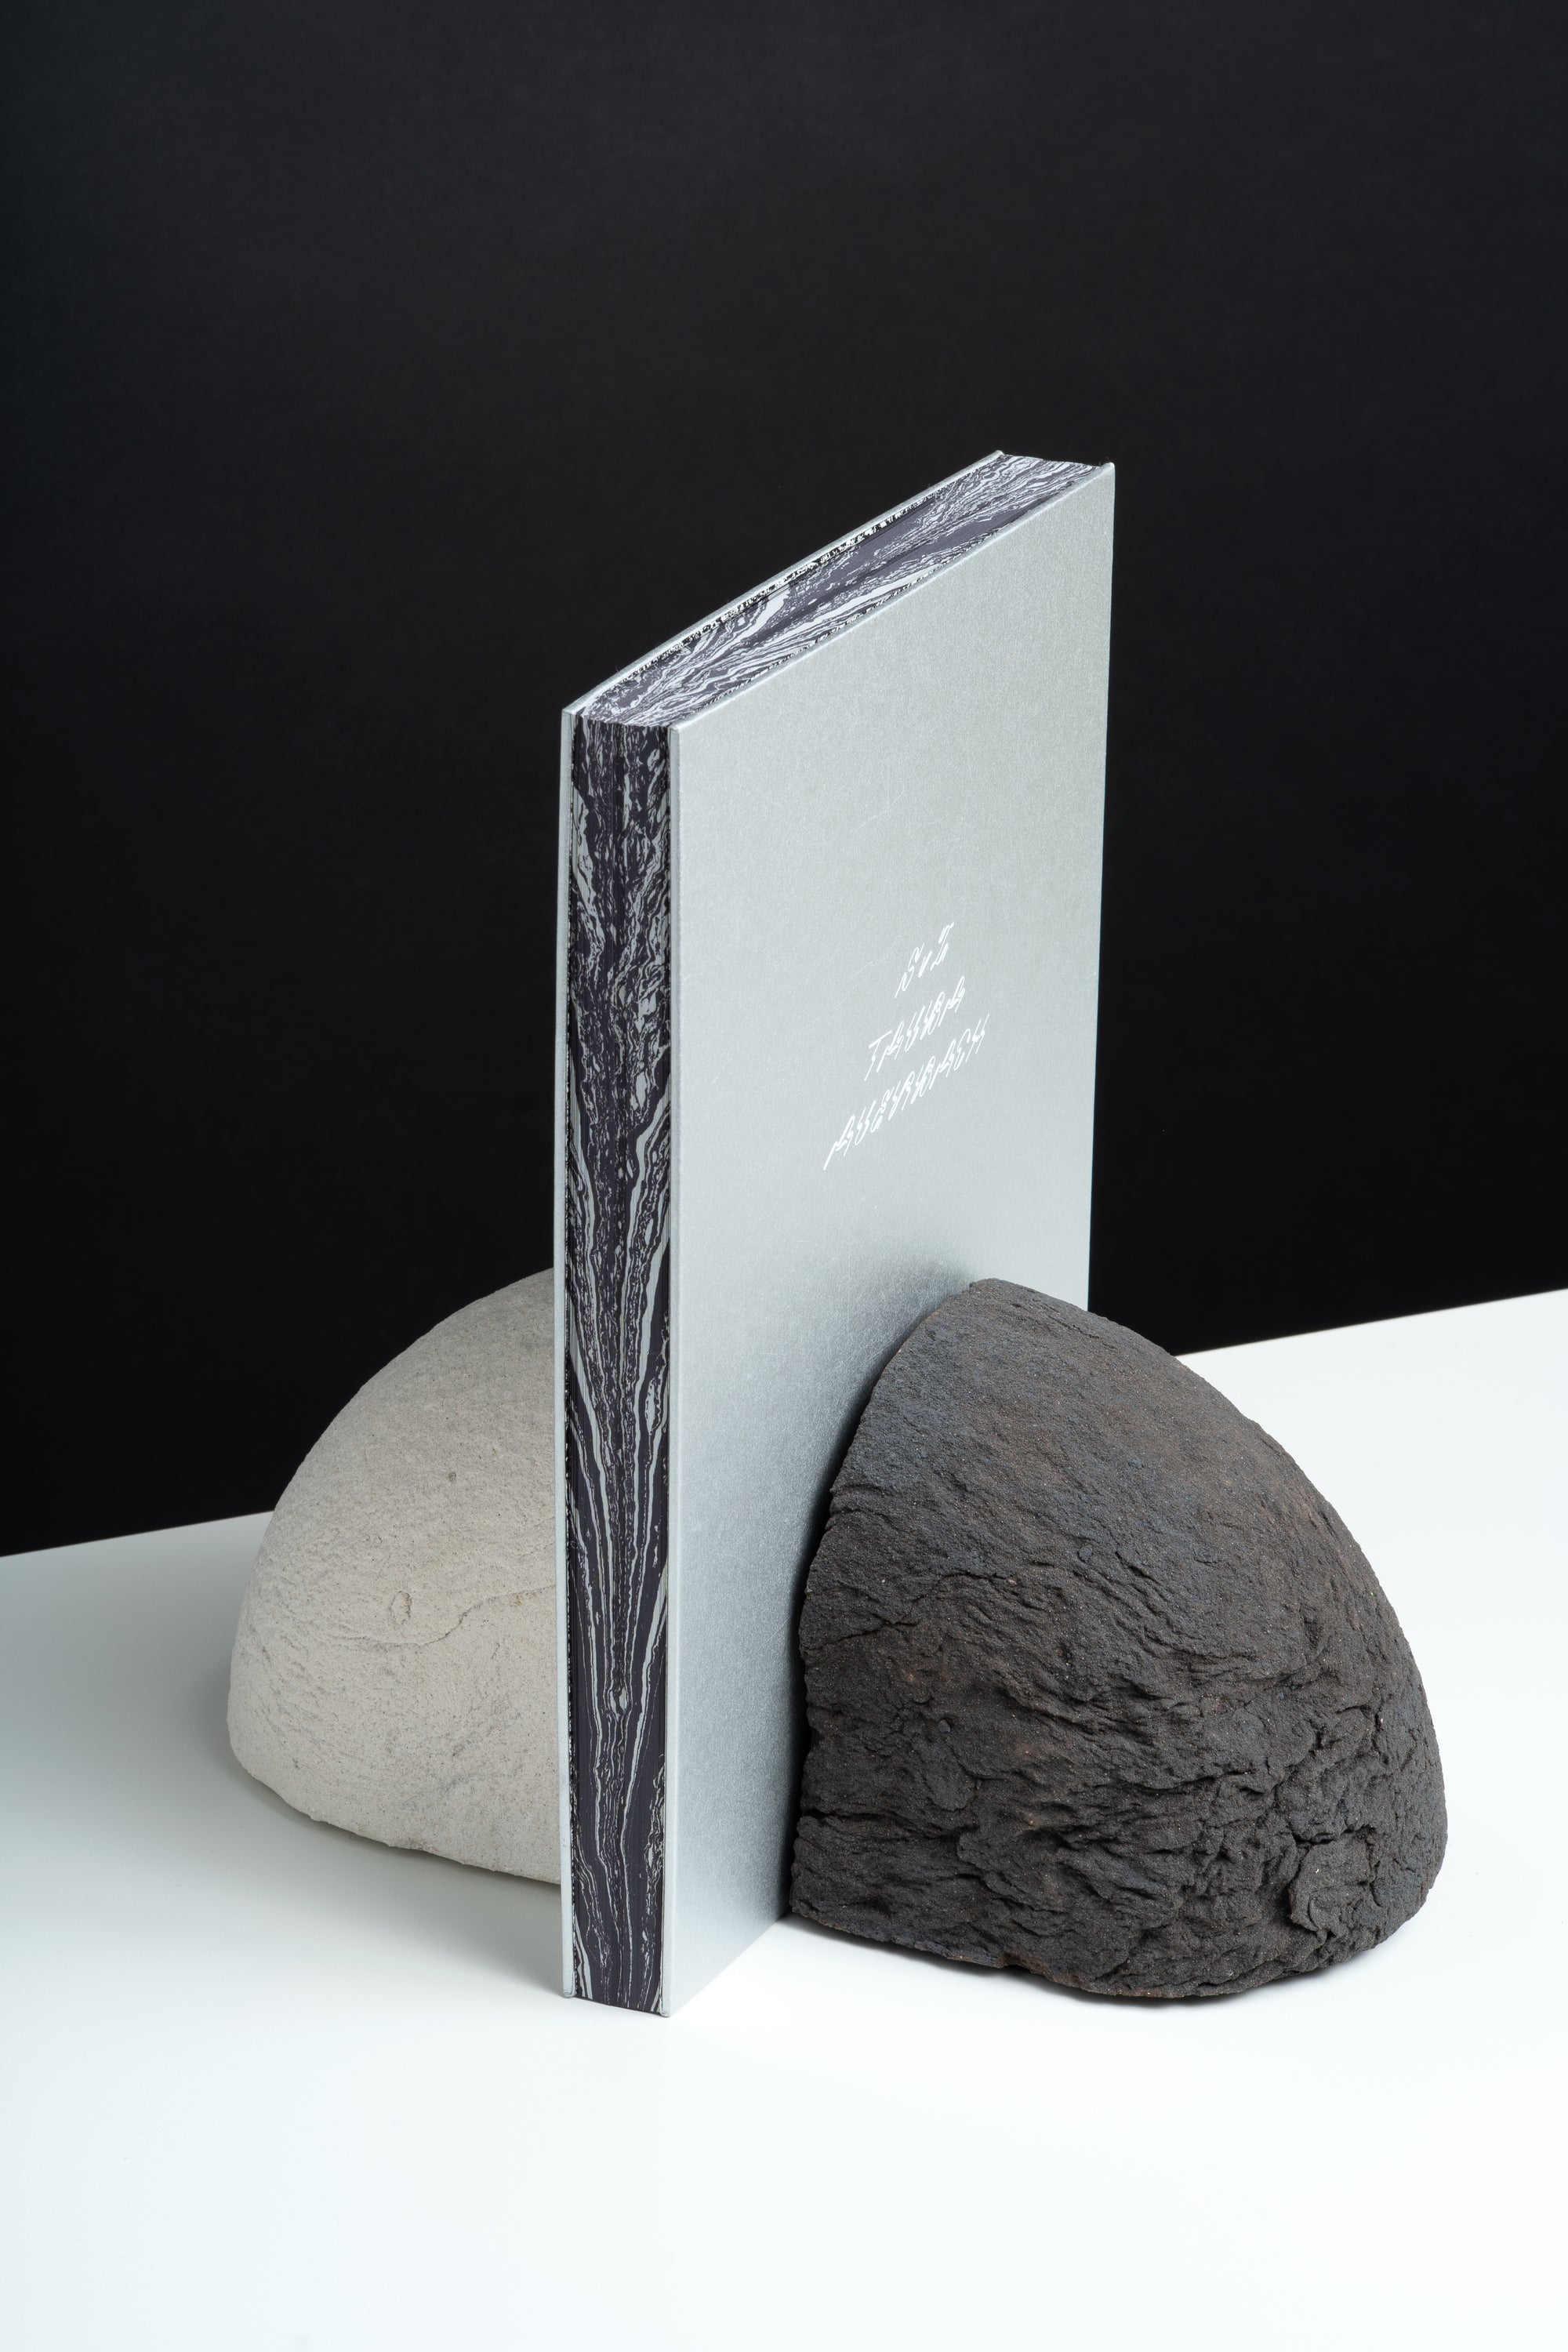 Virgil Abloh 'Figures of Speech' Book Receives Award for Design – WWD